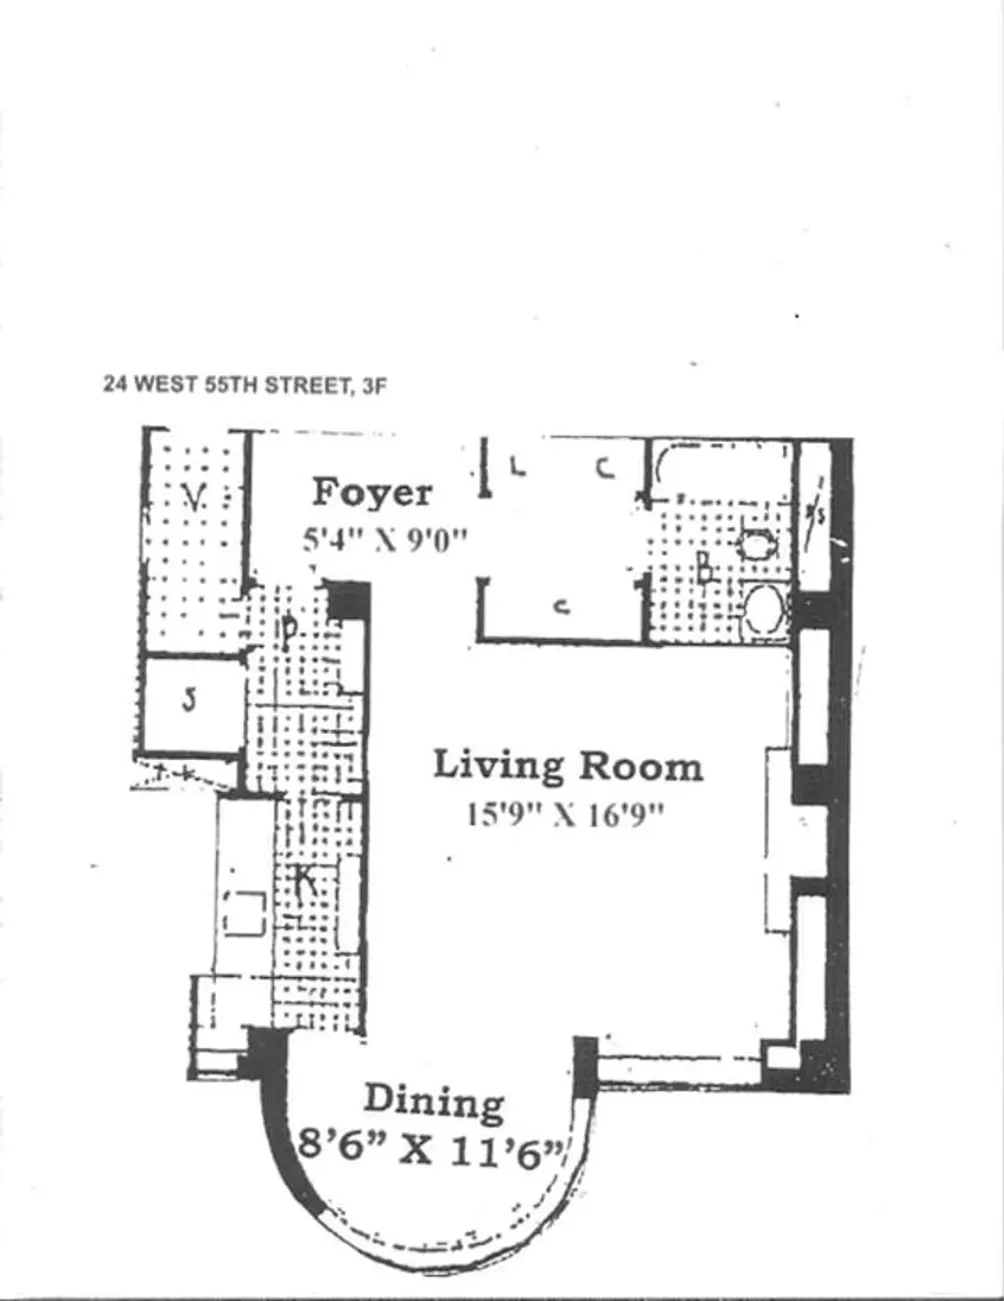 24 West 55th Street #3F floor plan